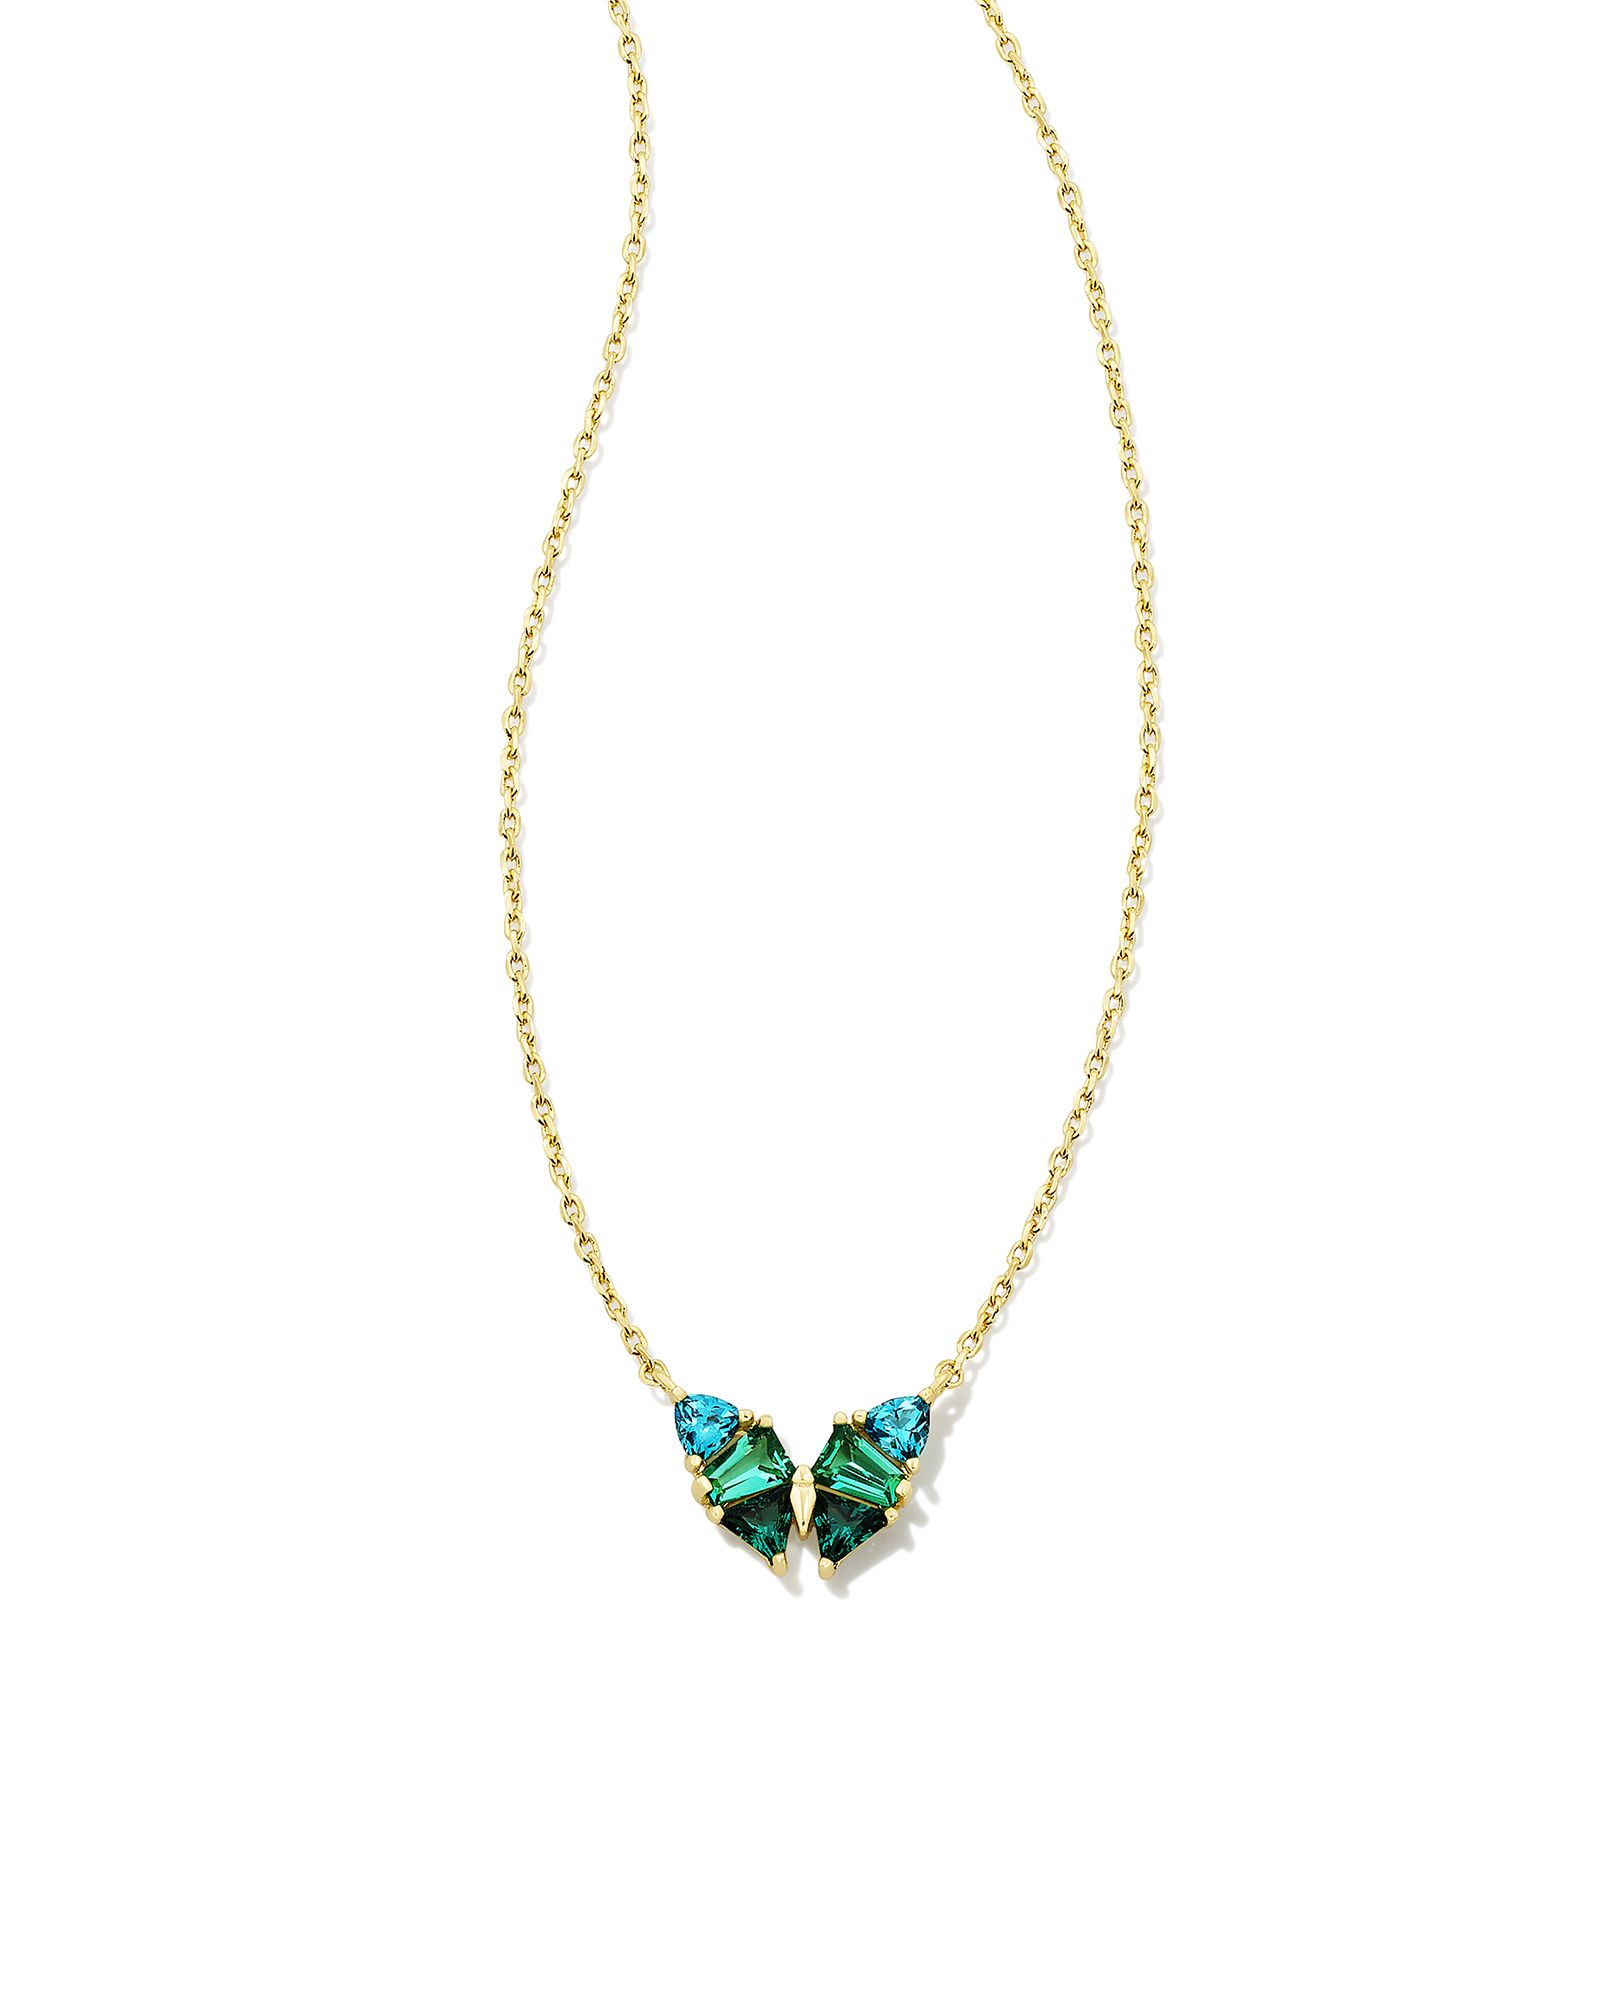 Blair Gold Butterfly Small Short Pendant Necklace in Green Mix | Kendra Scott | Kendra Scott